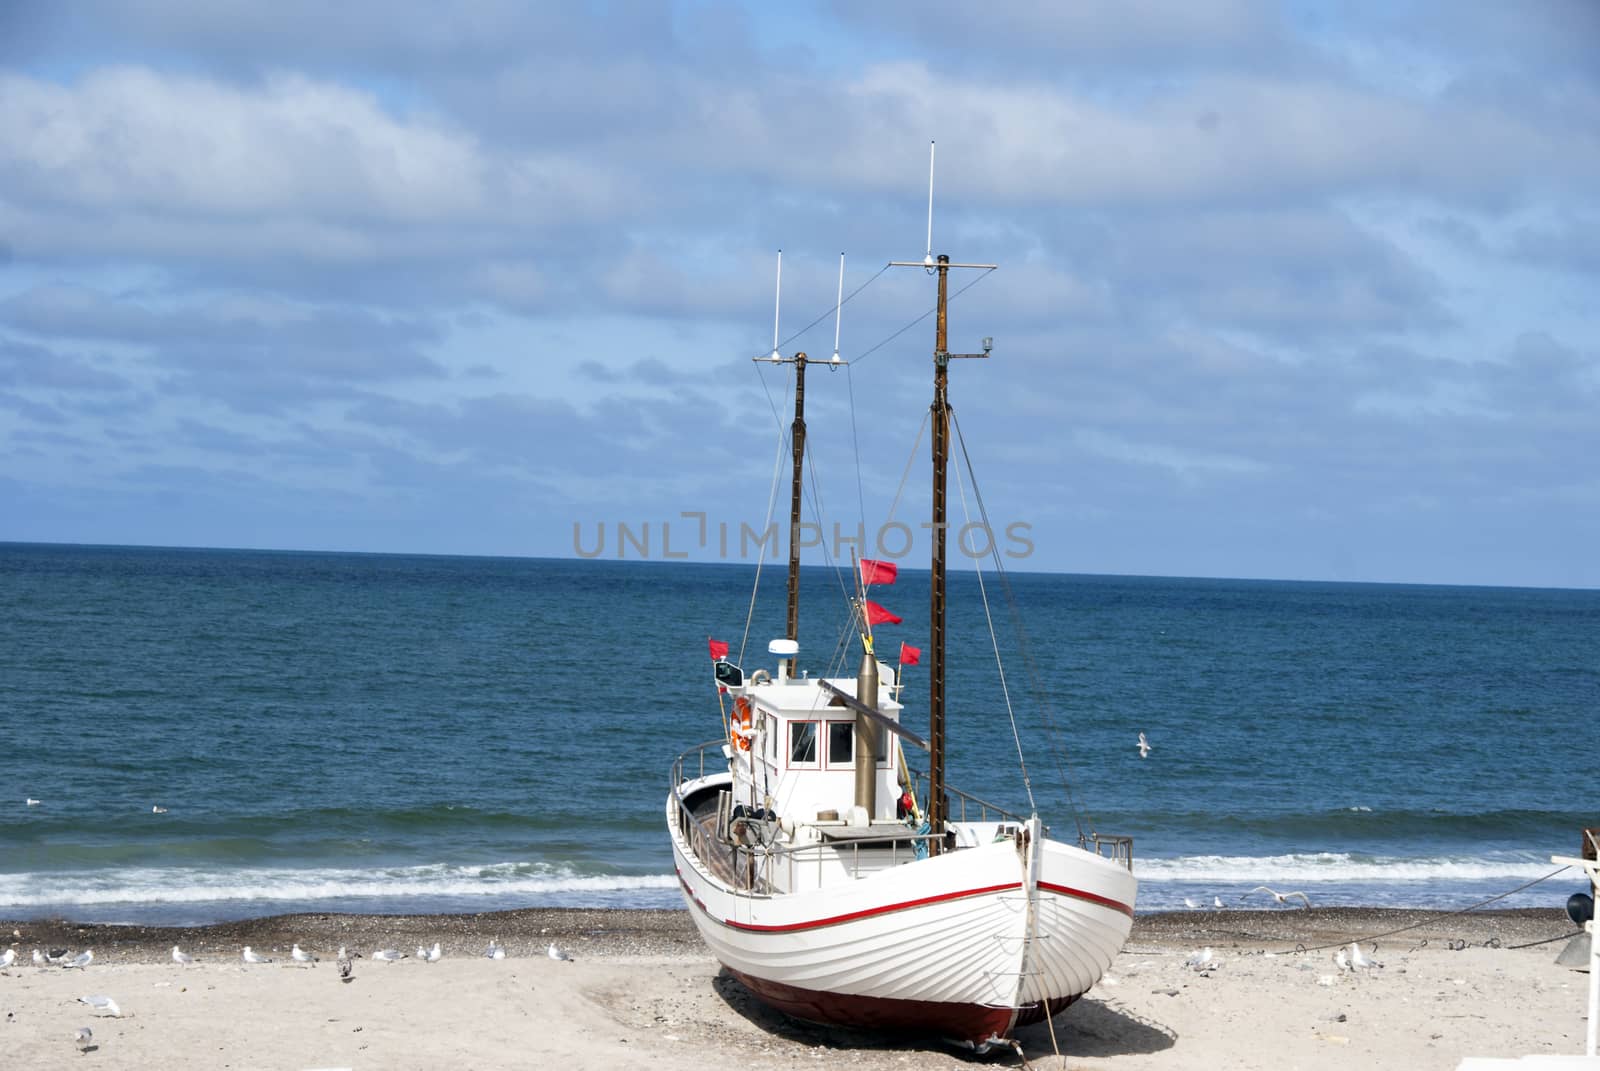 Fishing boat on the beach in Denmark